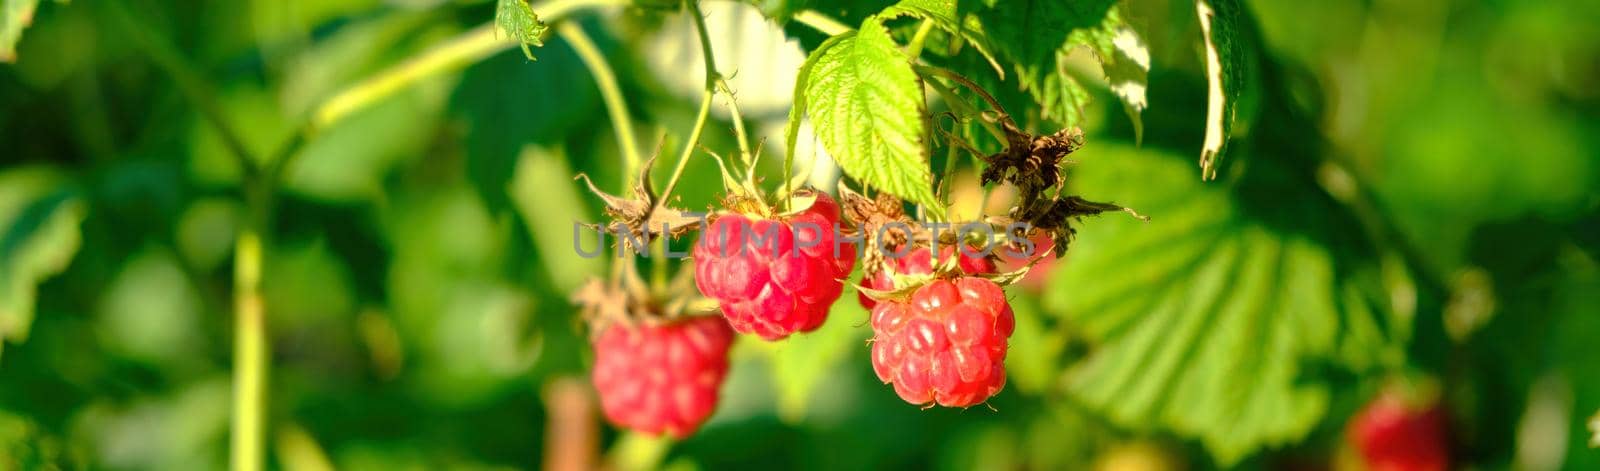 branch of ripe raspberries in a garden by igor010